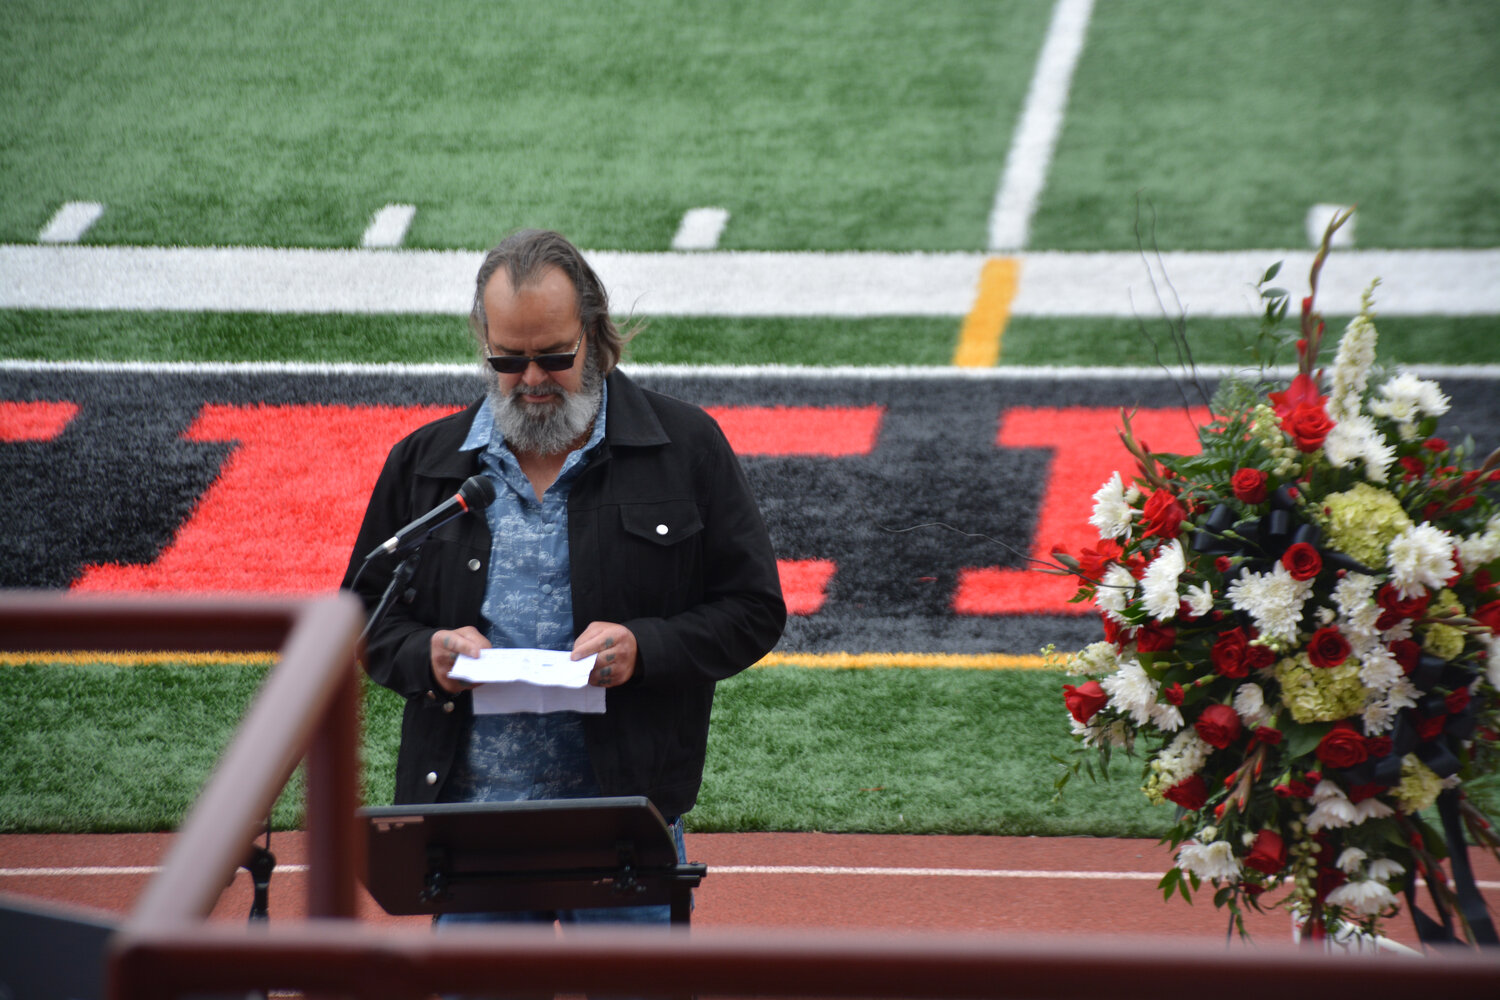 Dwayne McCarver shares his memories of Shawn Jemtegaard at the memorial on May 21.